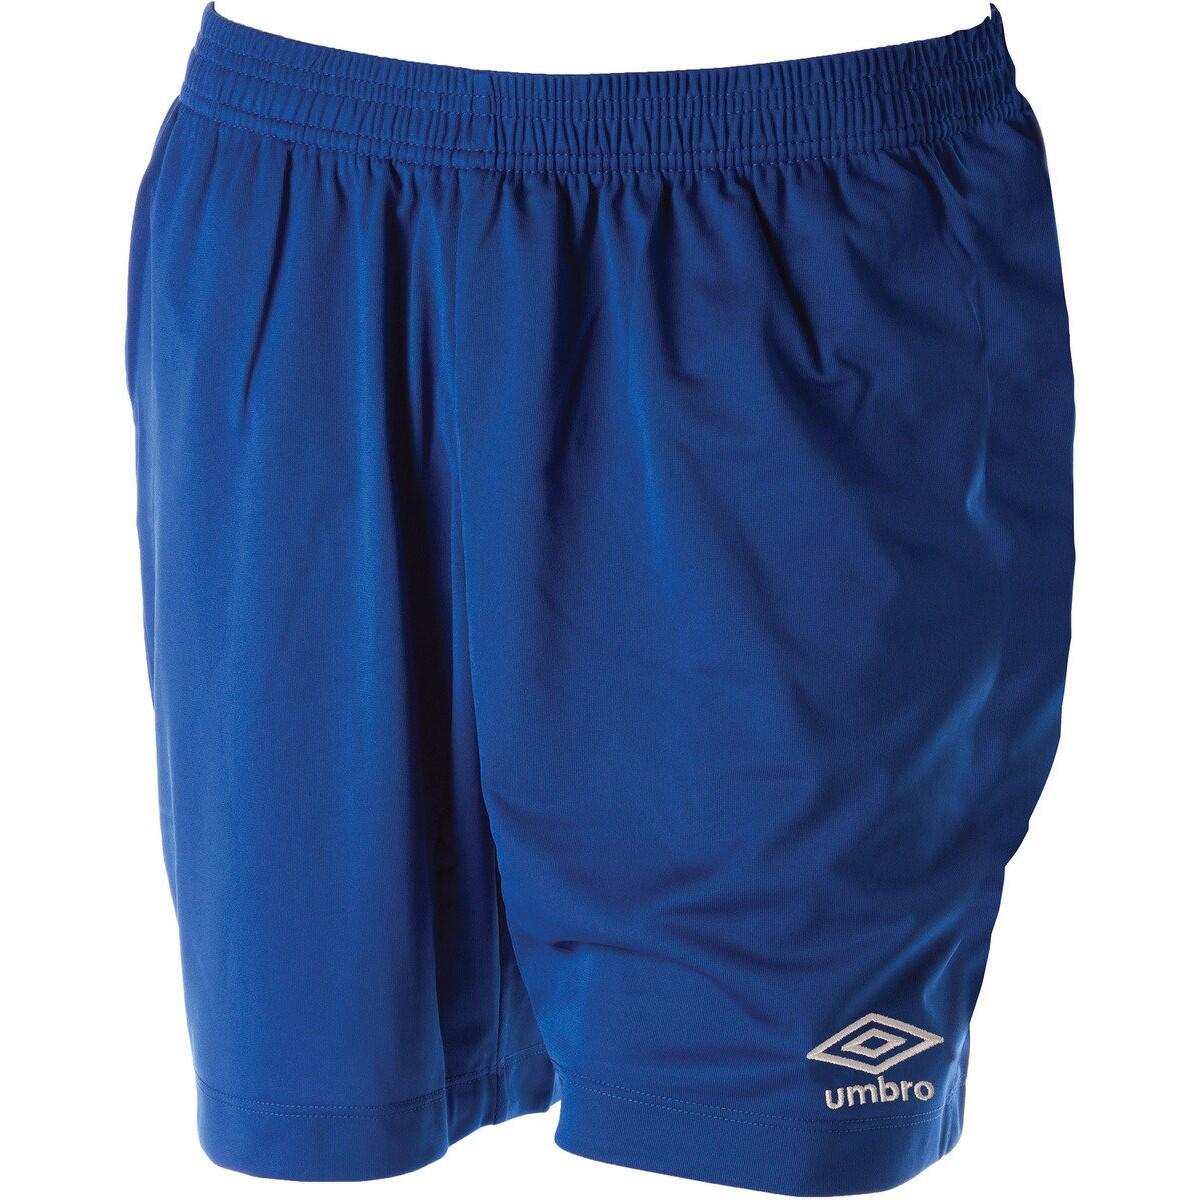 UMBRO Mens Club II Shorts (Royal Blue)